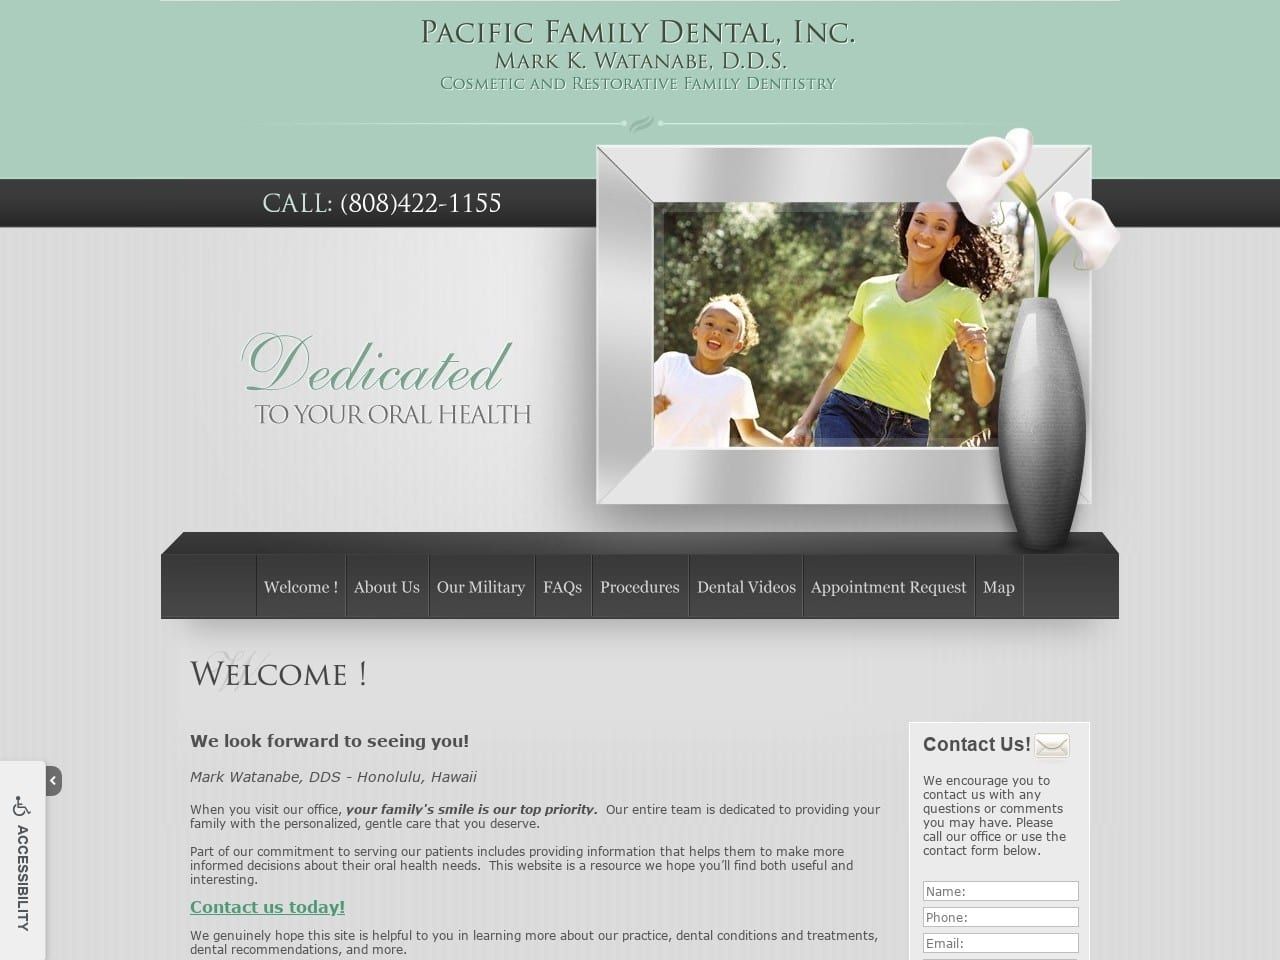 Pacific Family Dental Website Screenshot from pacificfamilydental.net